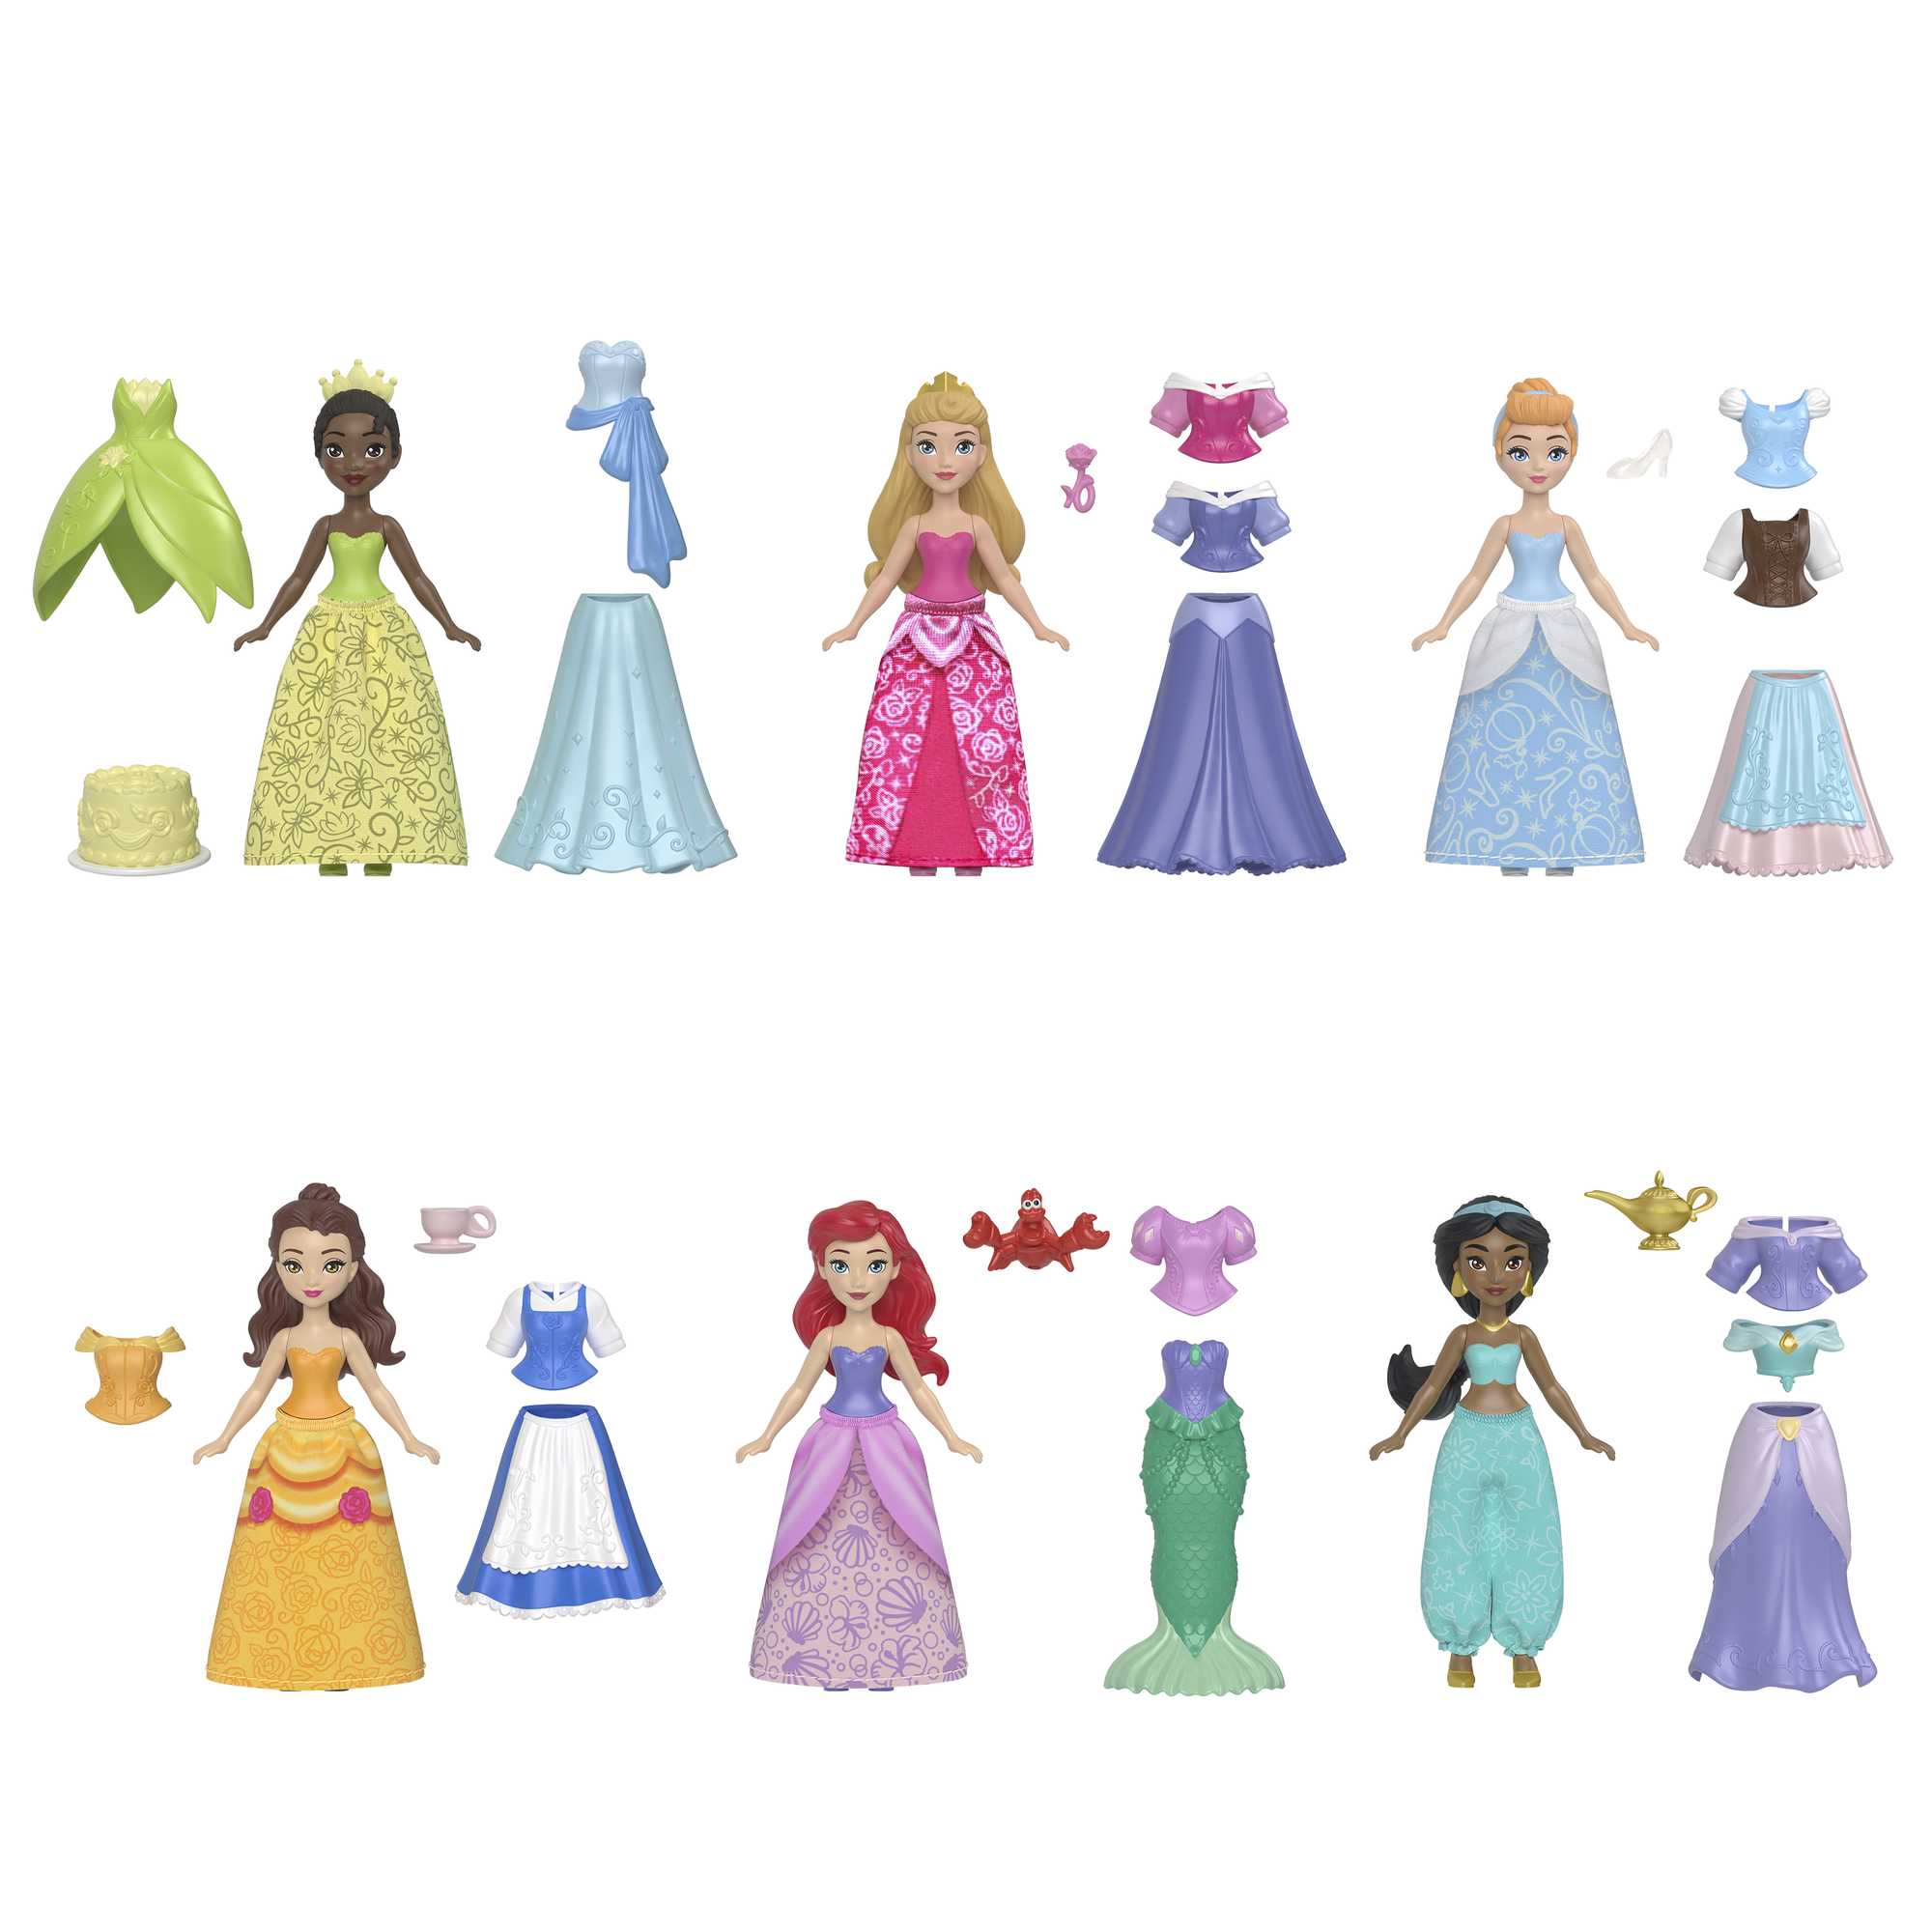 Belle as Prince Adam  Disney dress up, Disney princesses and princes,  Azalea dress up